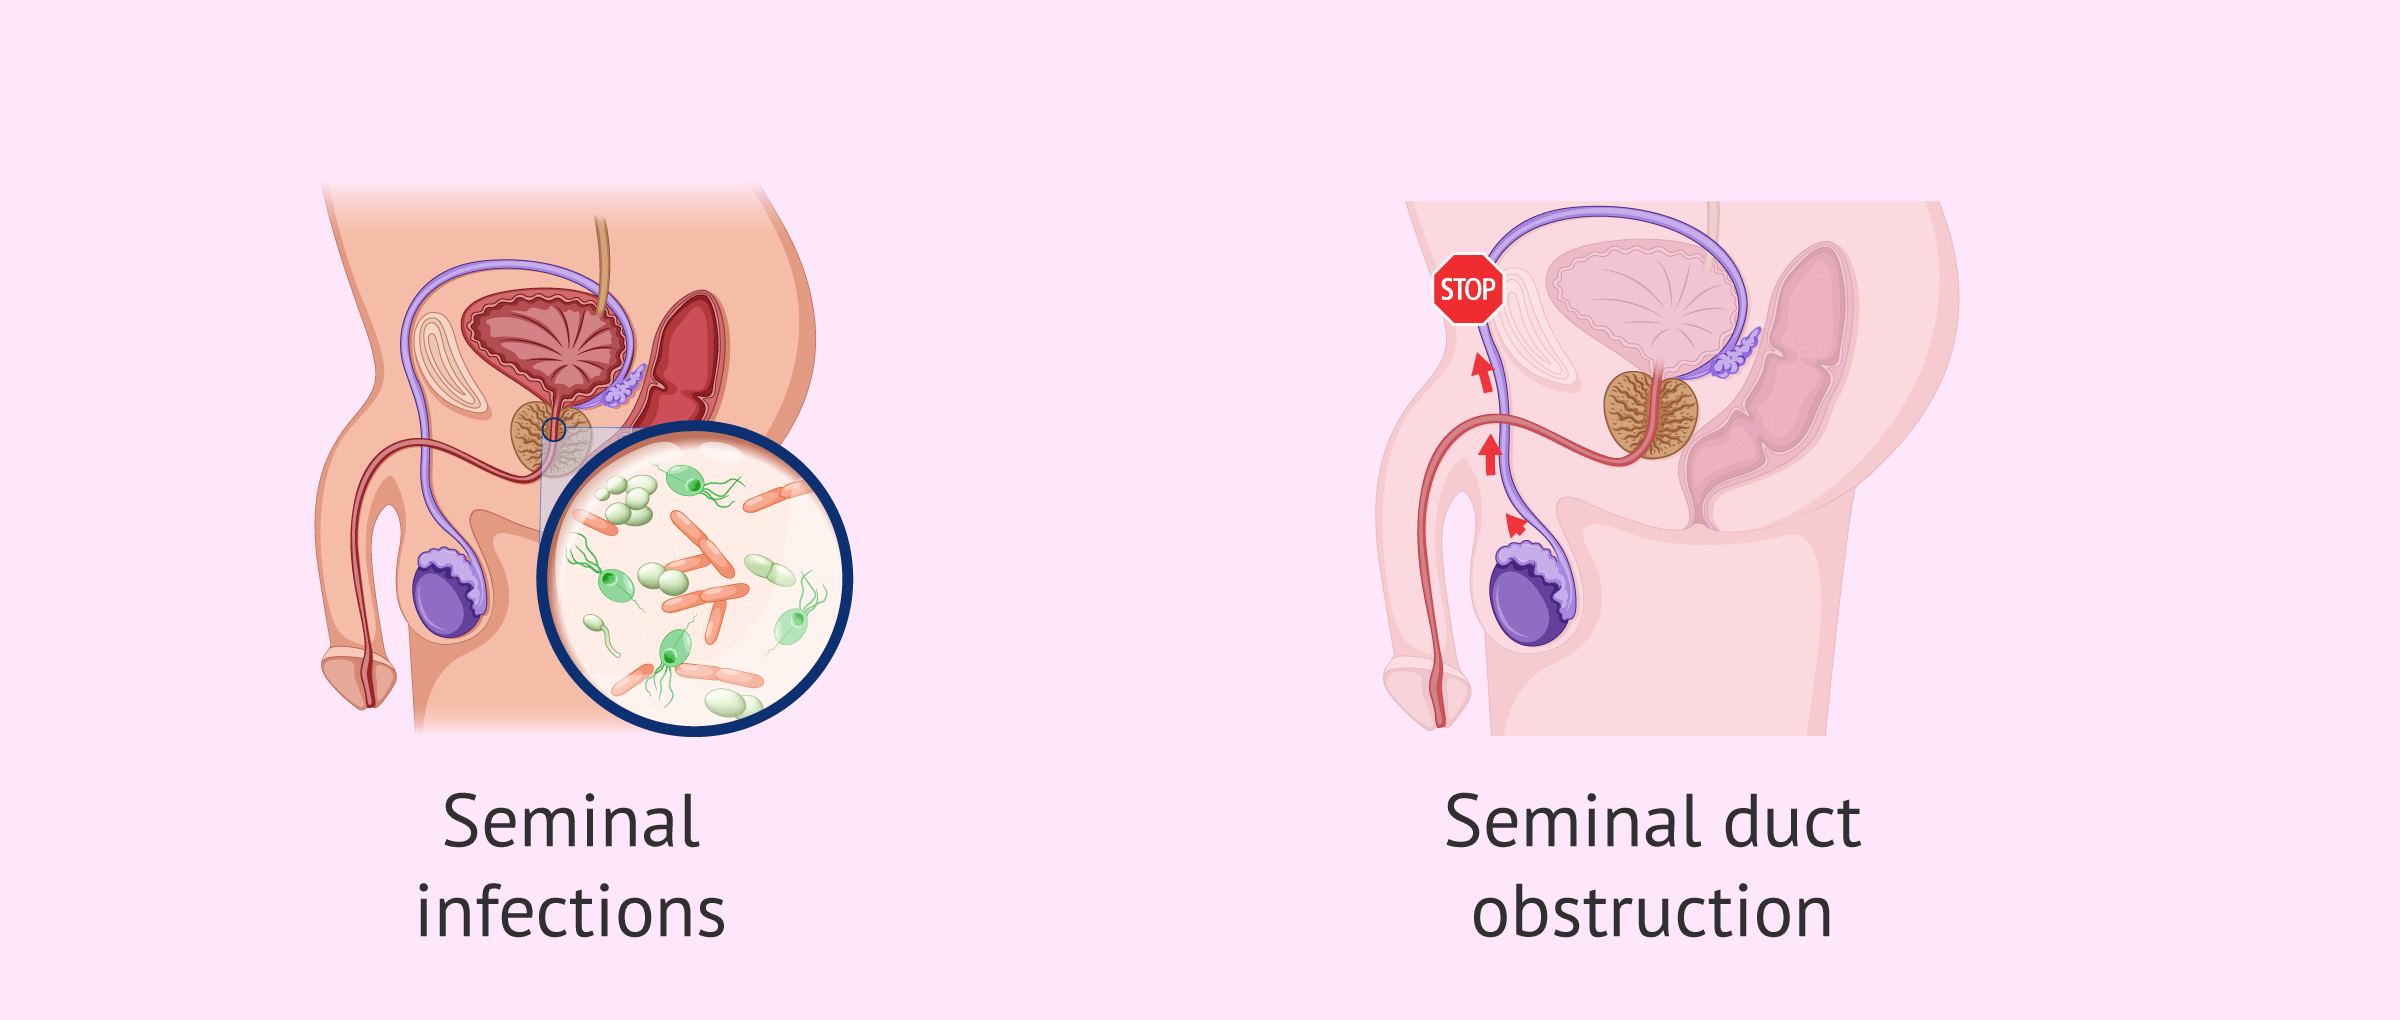 Oligospermia due to post-testicular causes